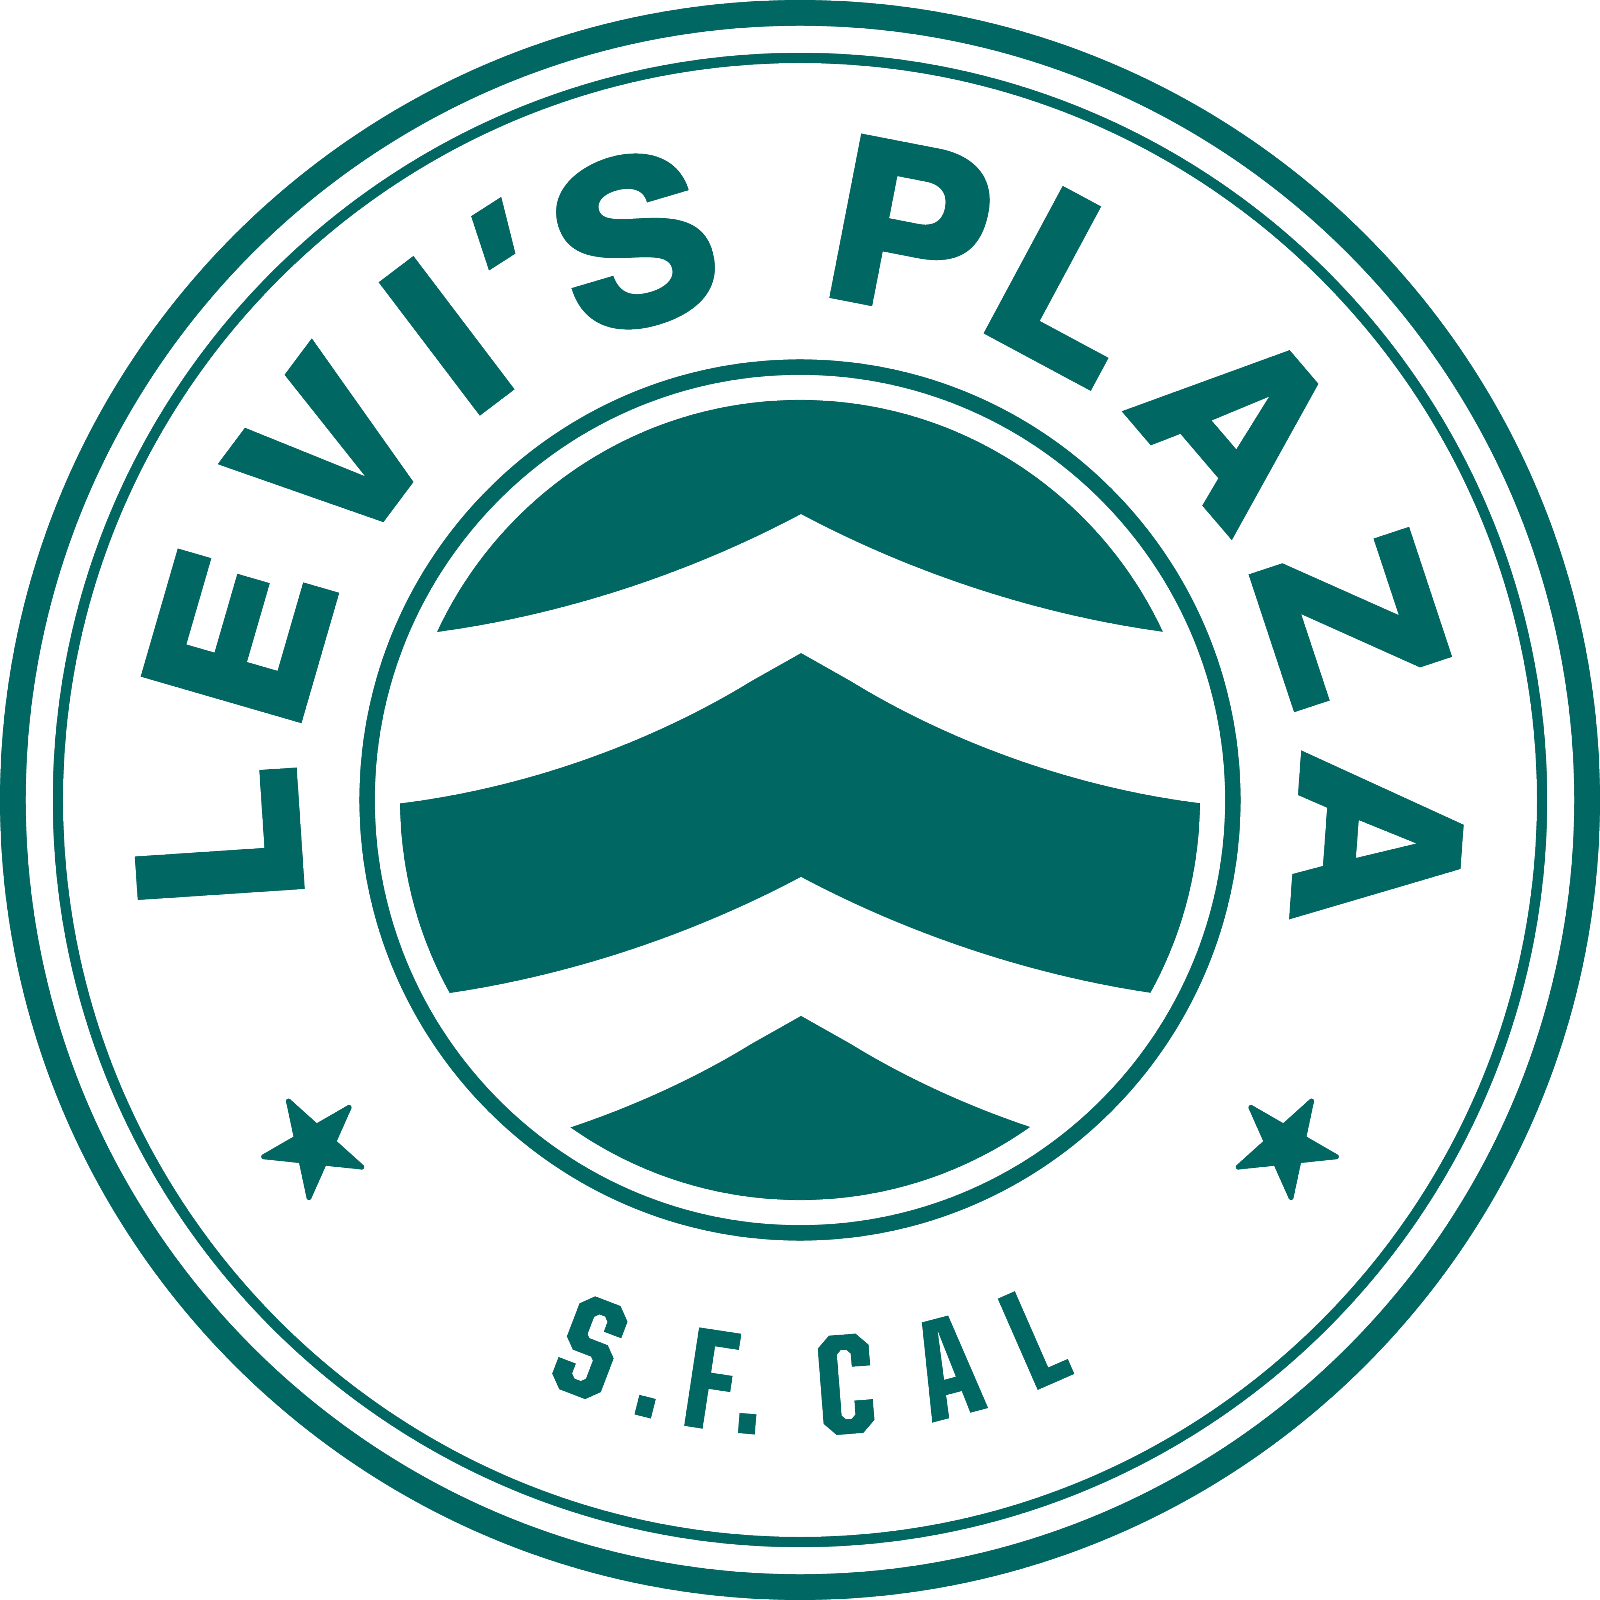 Levi's Plaza